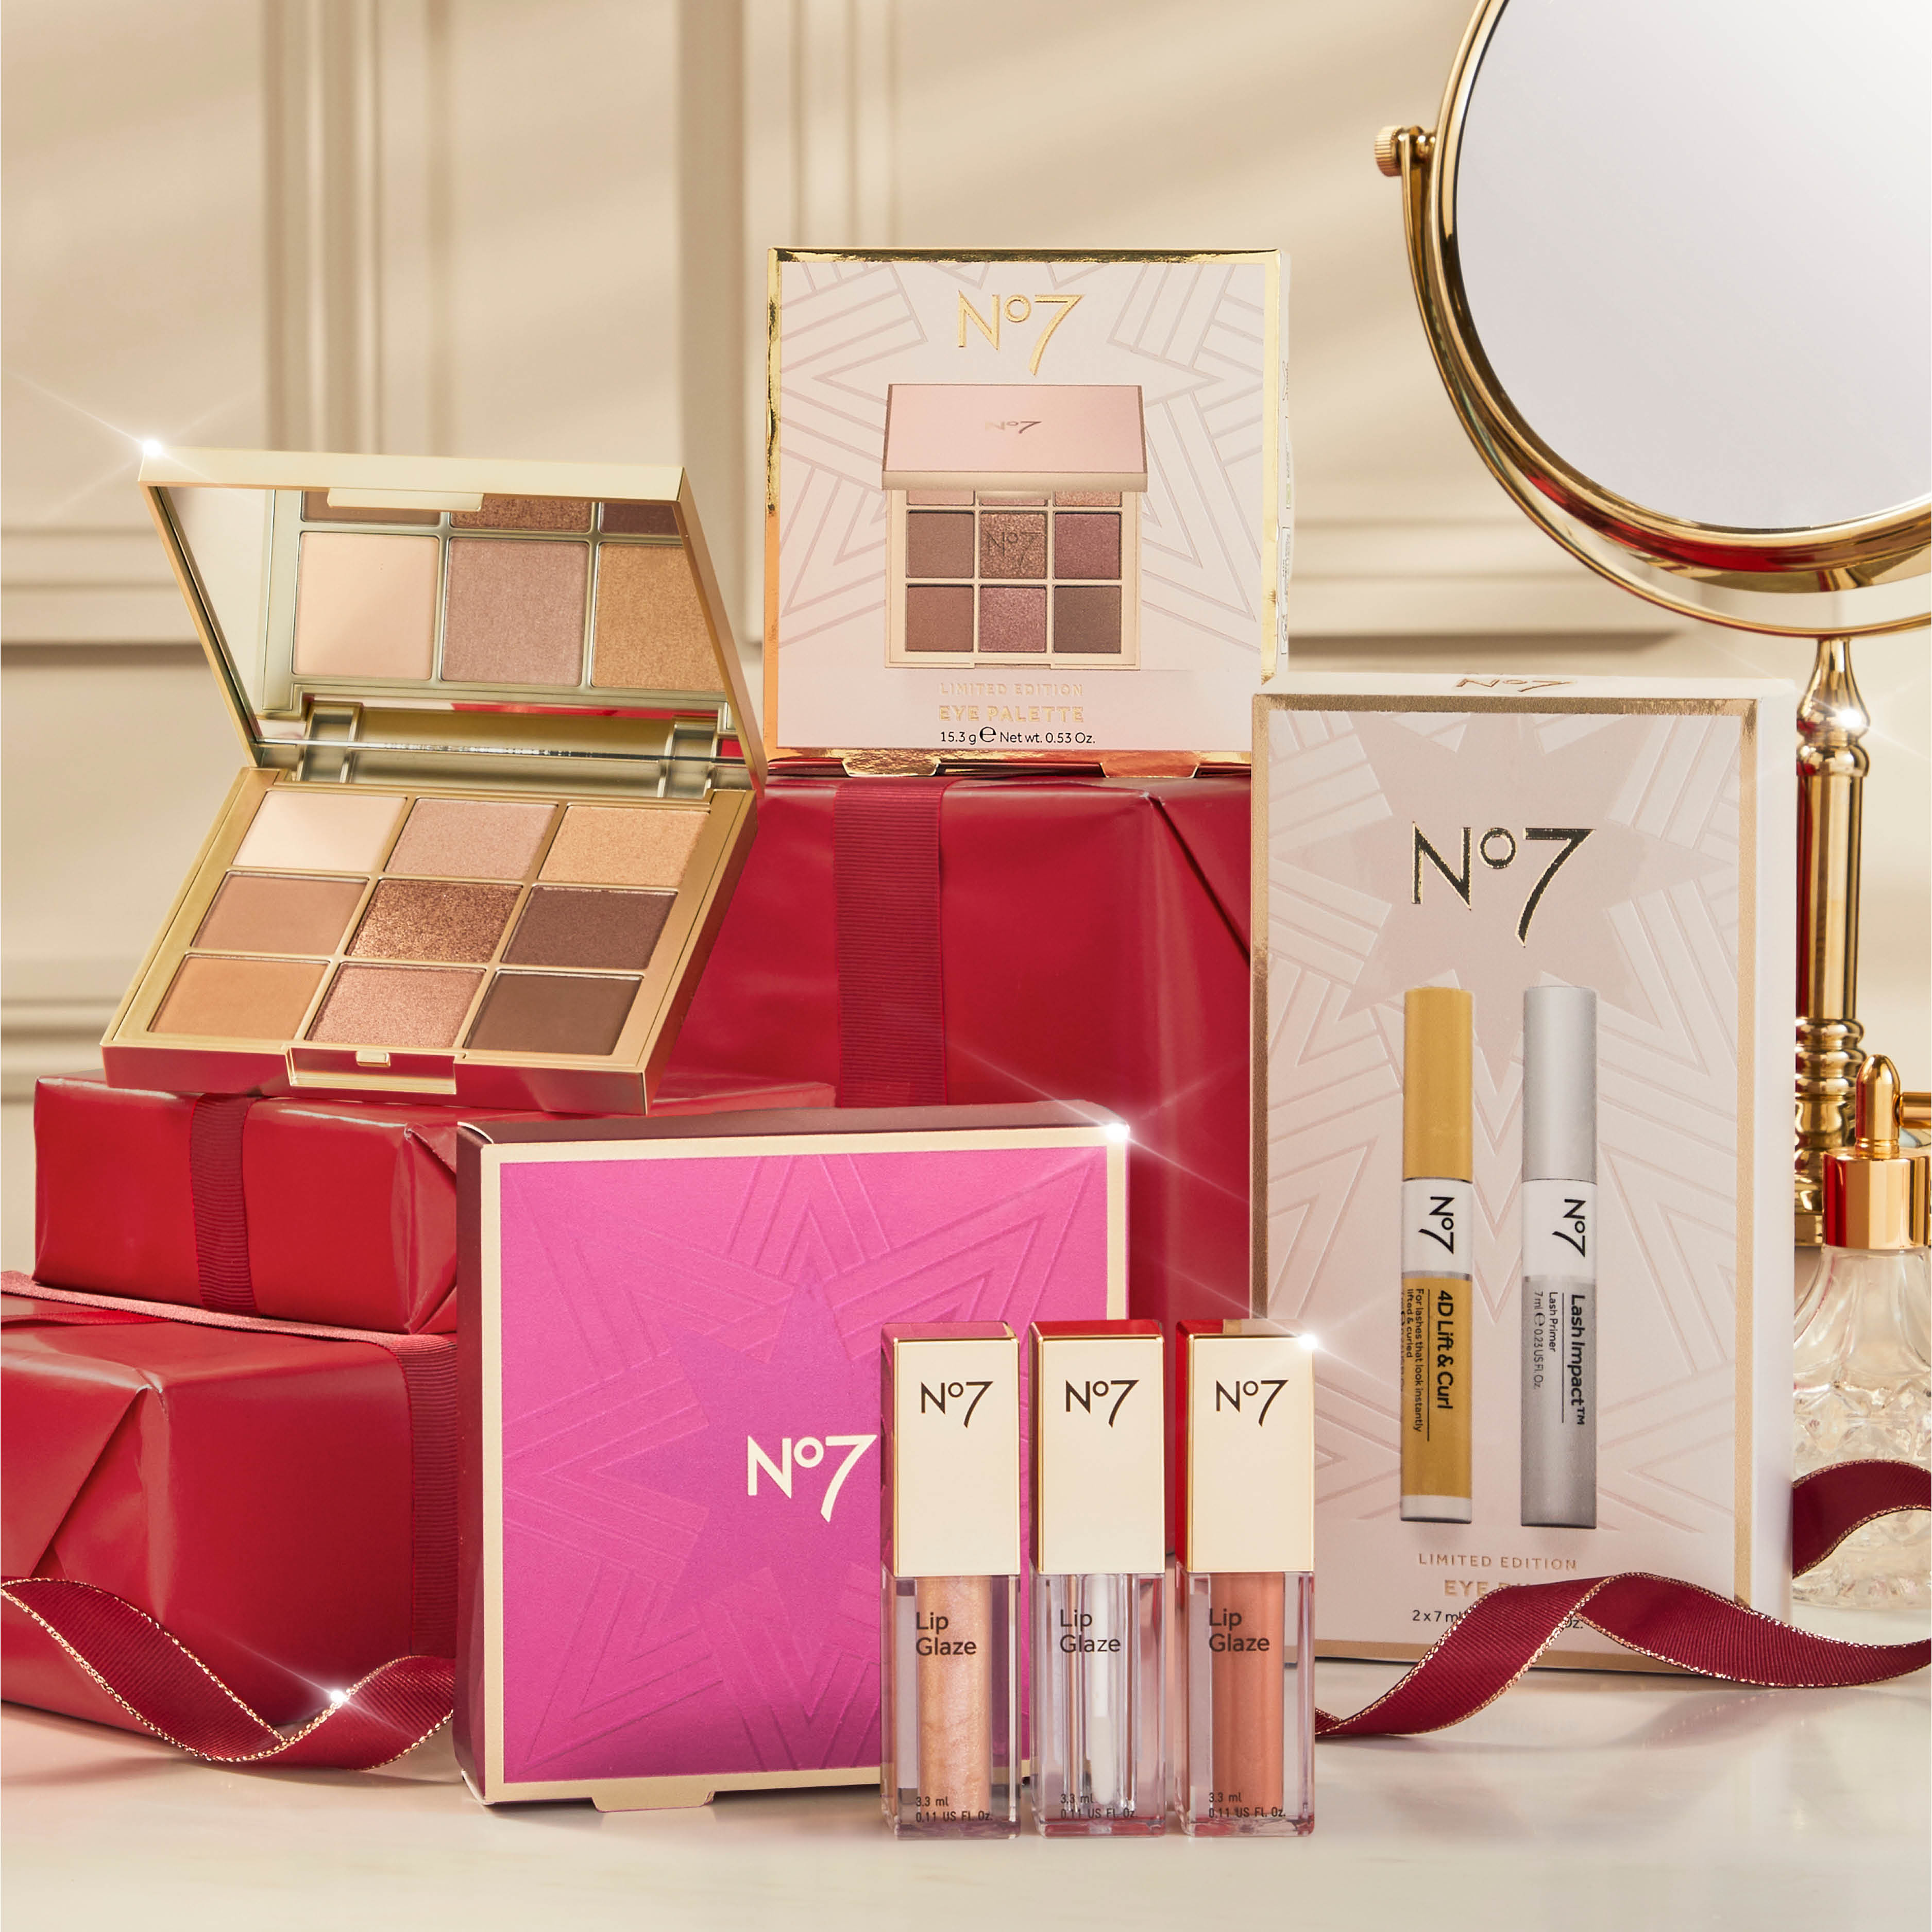 No7 Beauty, Skincare, & Makeup Products | No7 US